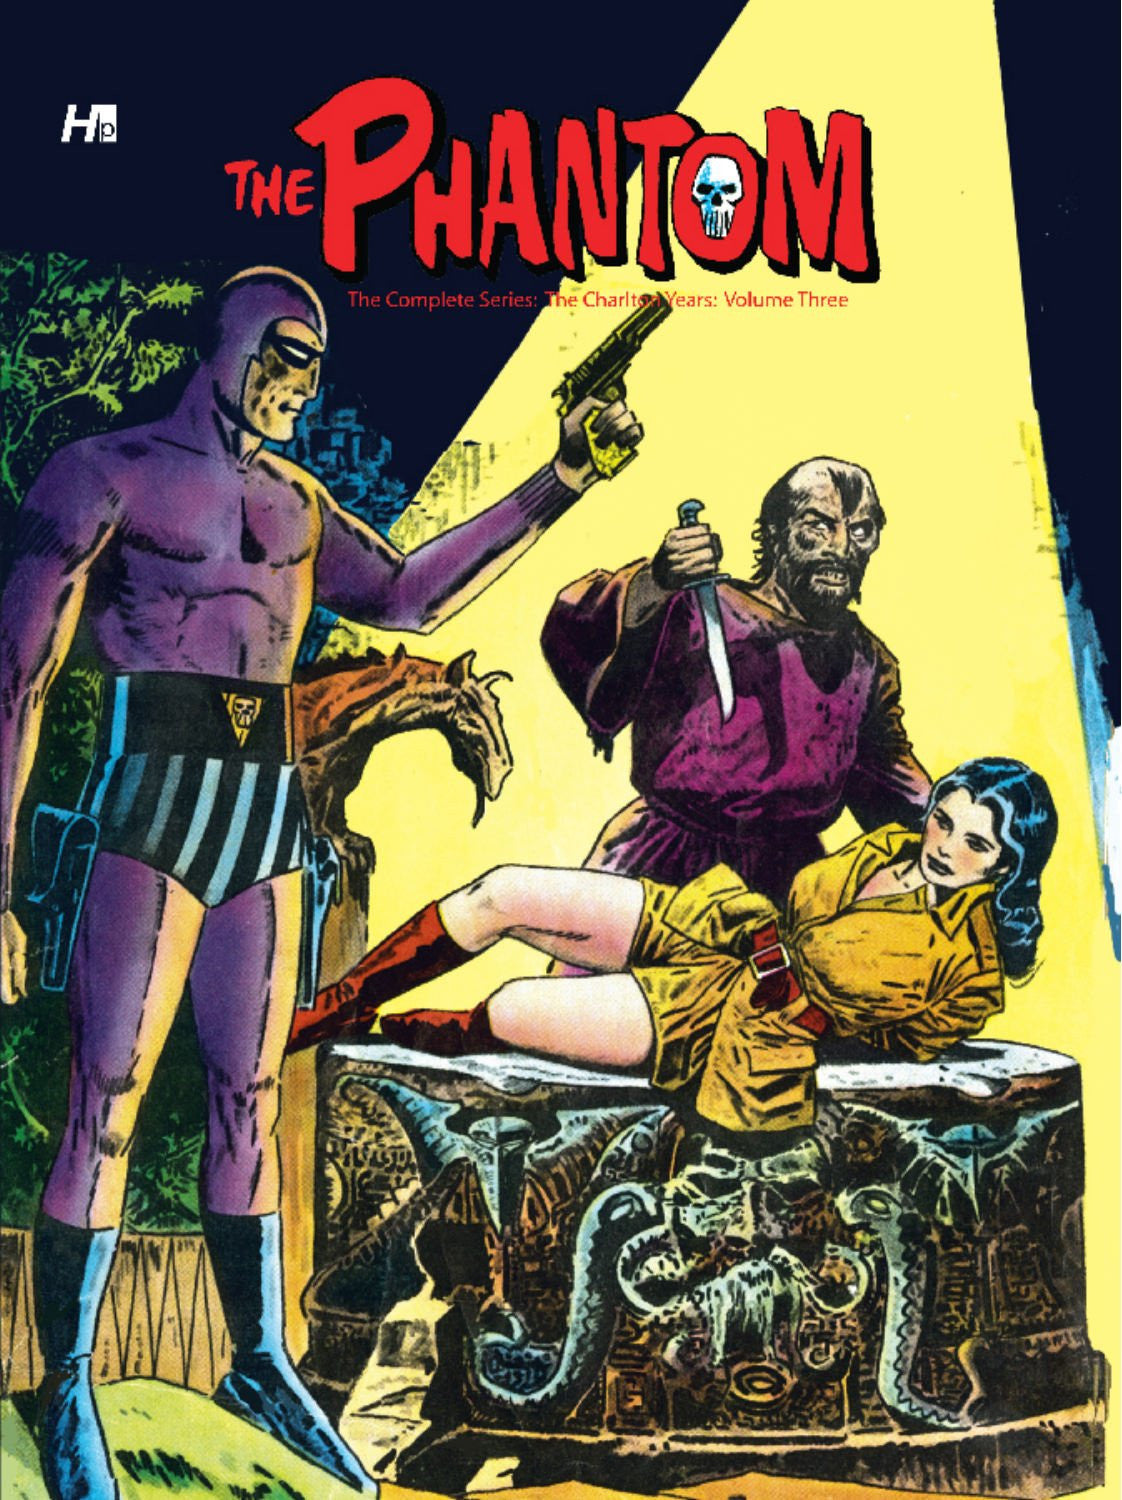 The Phantom Charlton Years: Vol. 3